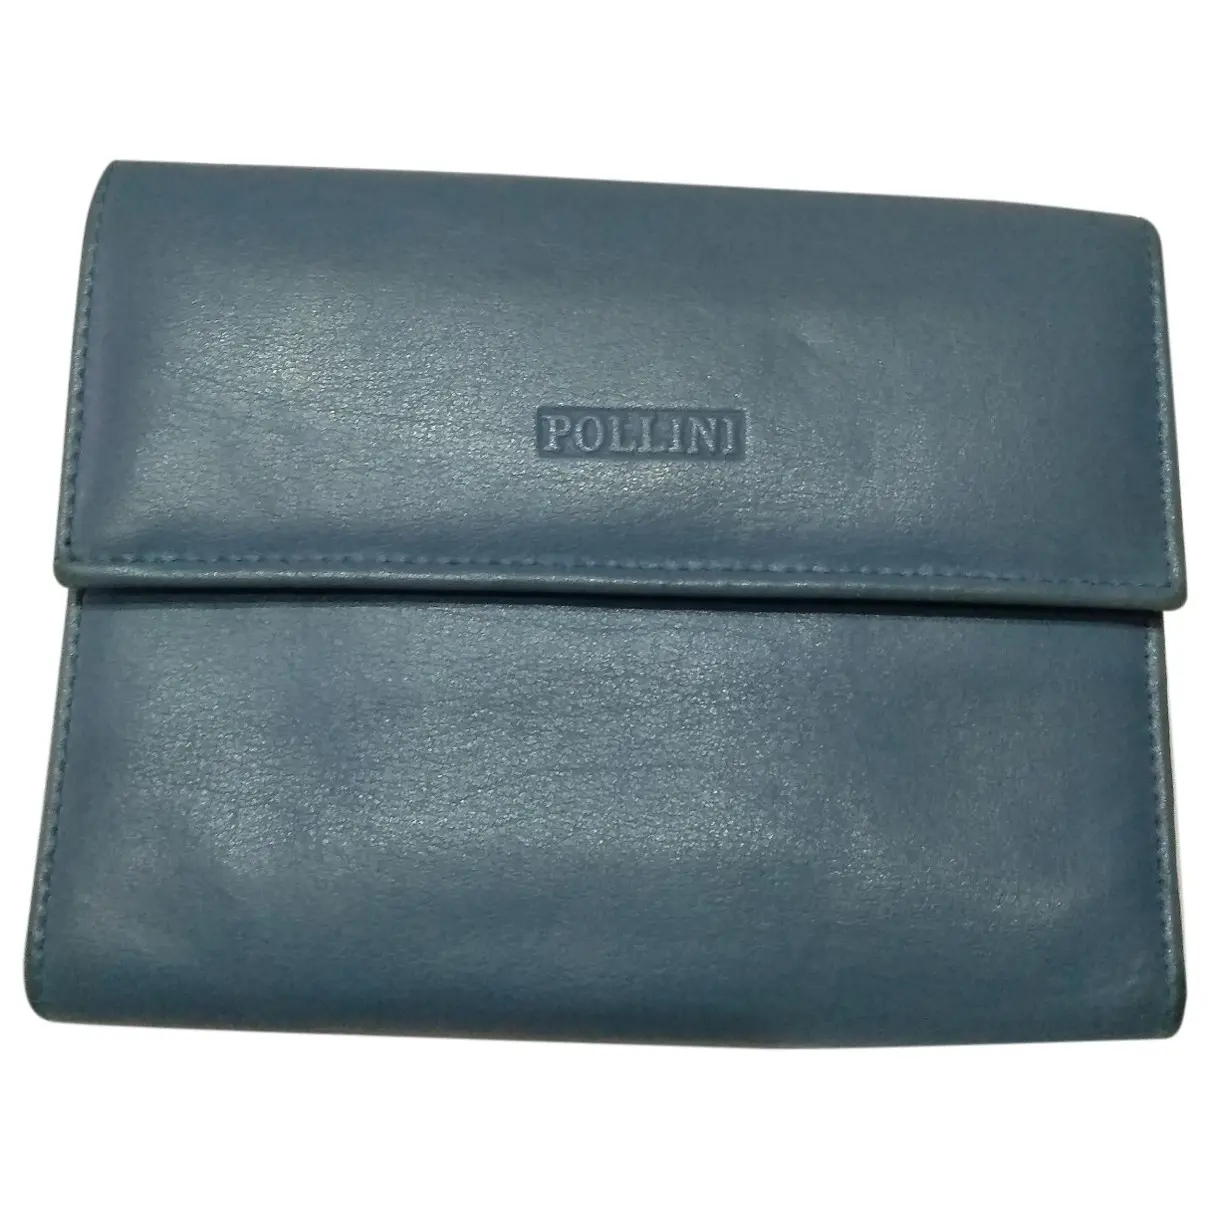 Leather wallet Pollini